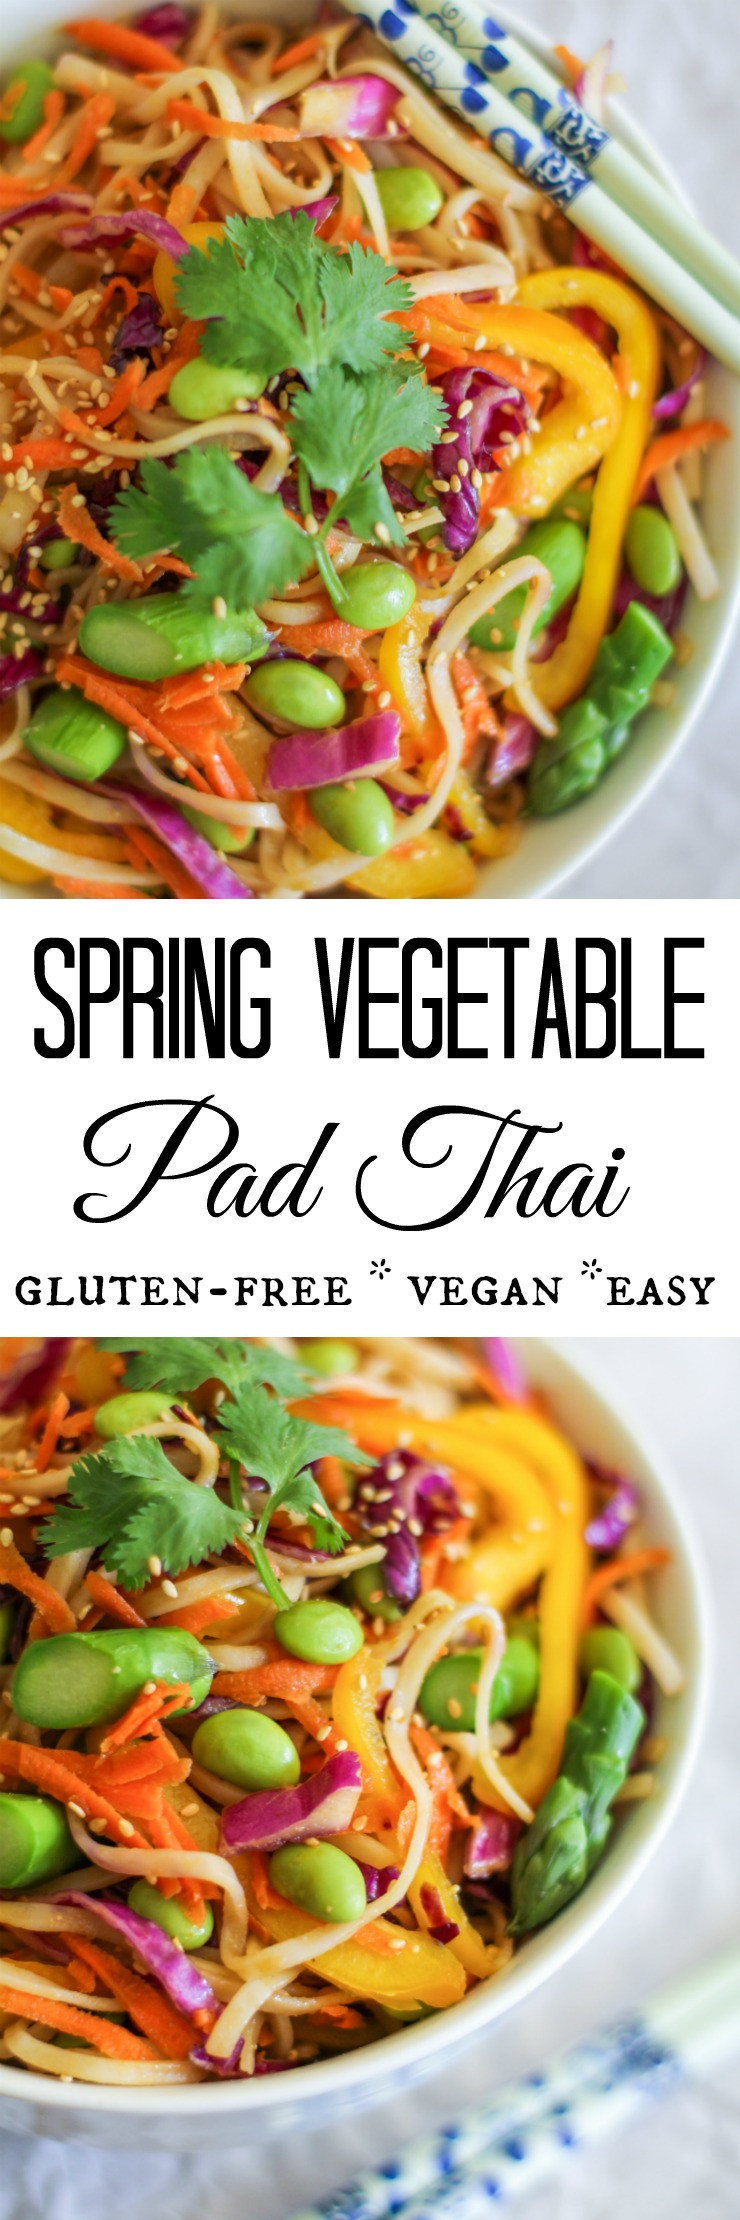 Pad Thai Mueller
 Spring Ve able Pad Thai vegan and gluten free